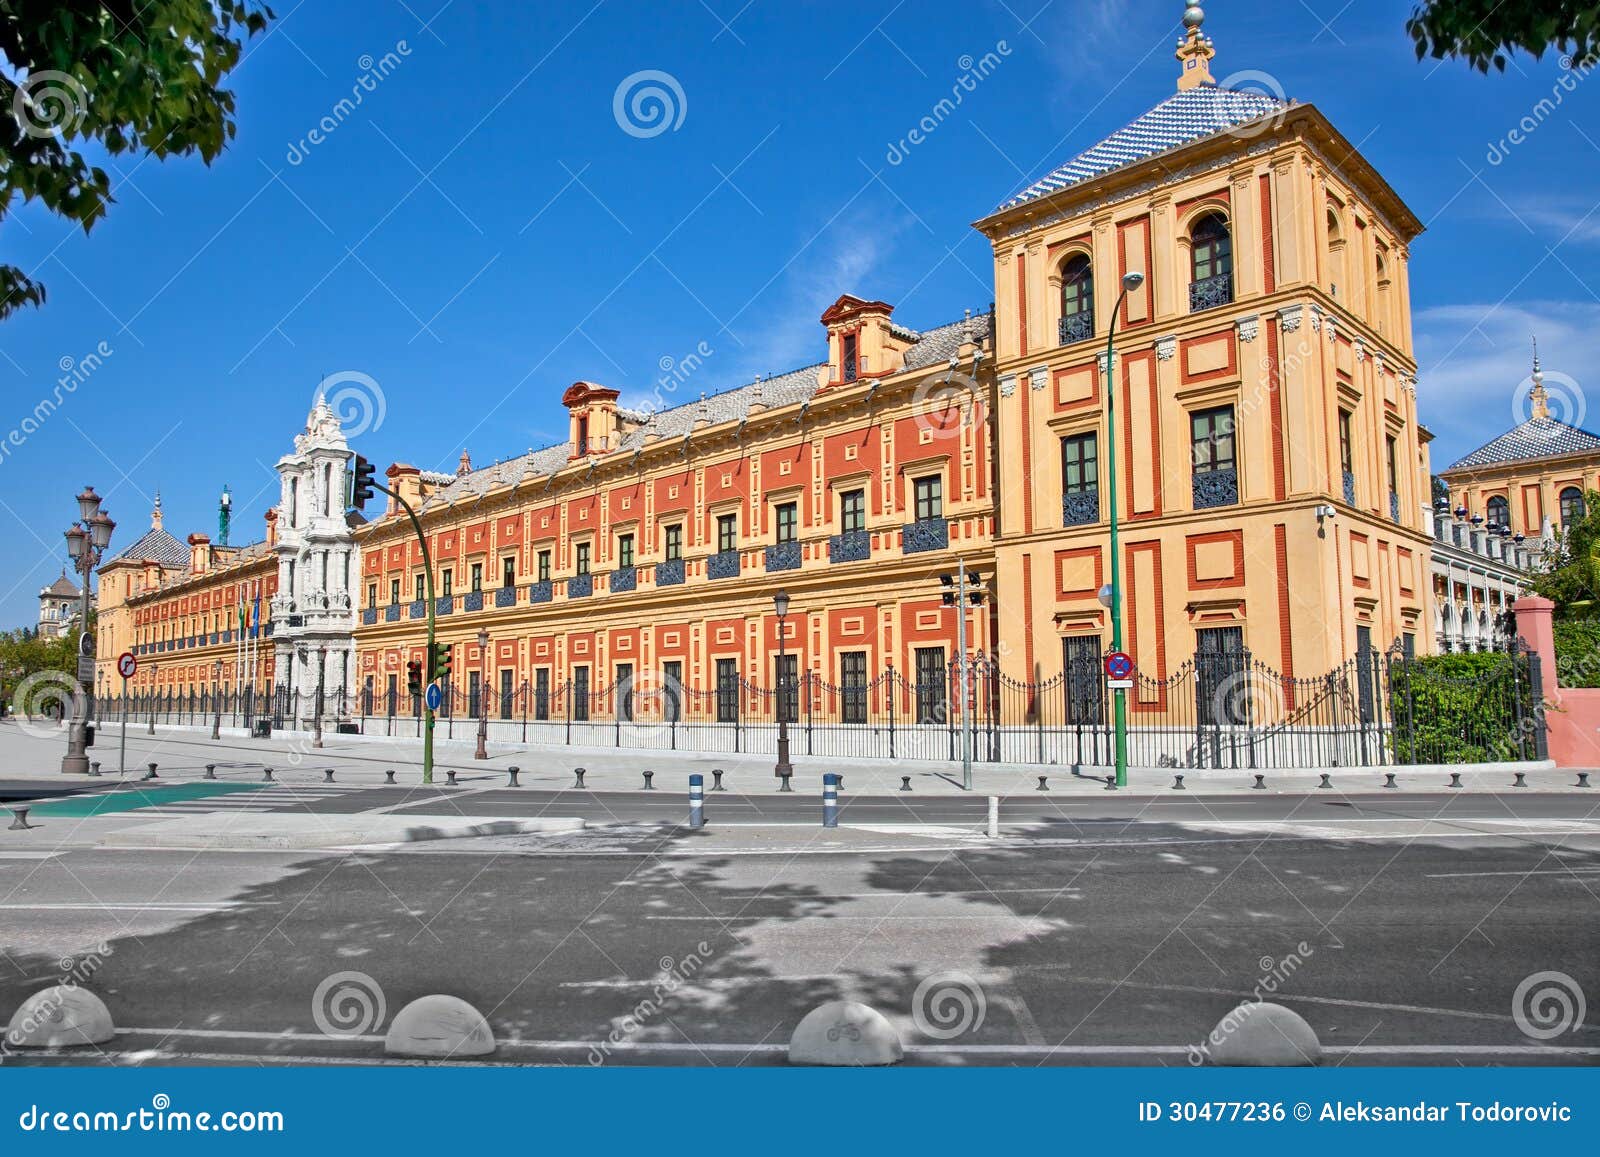 baroque facade of the palace of san telmo in seville. spain.